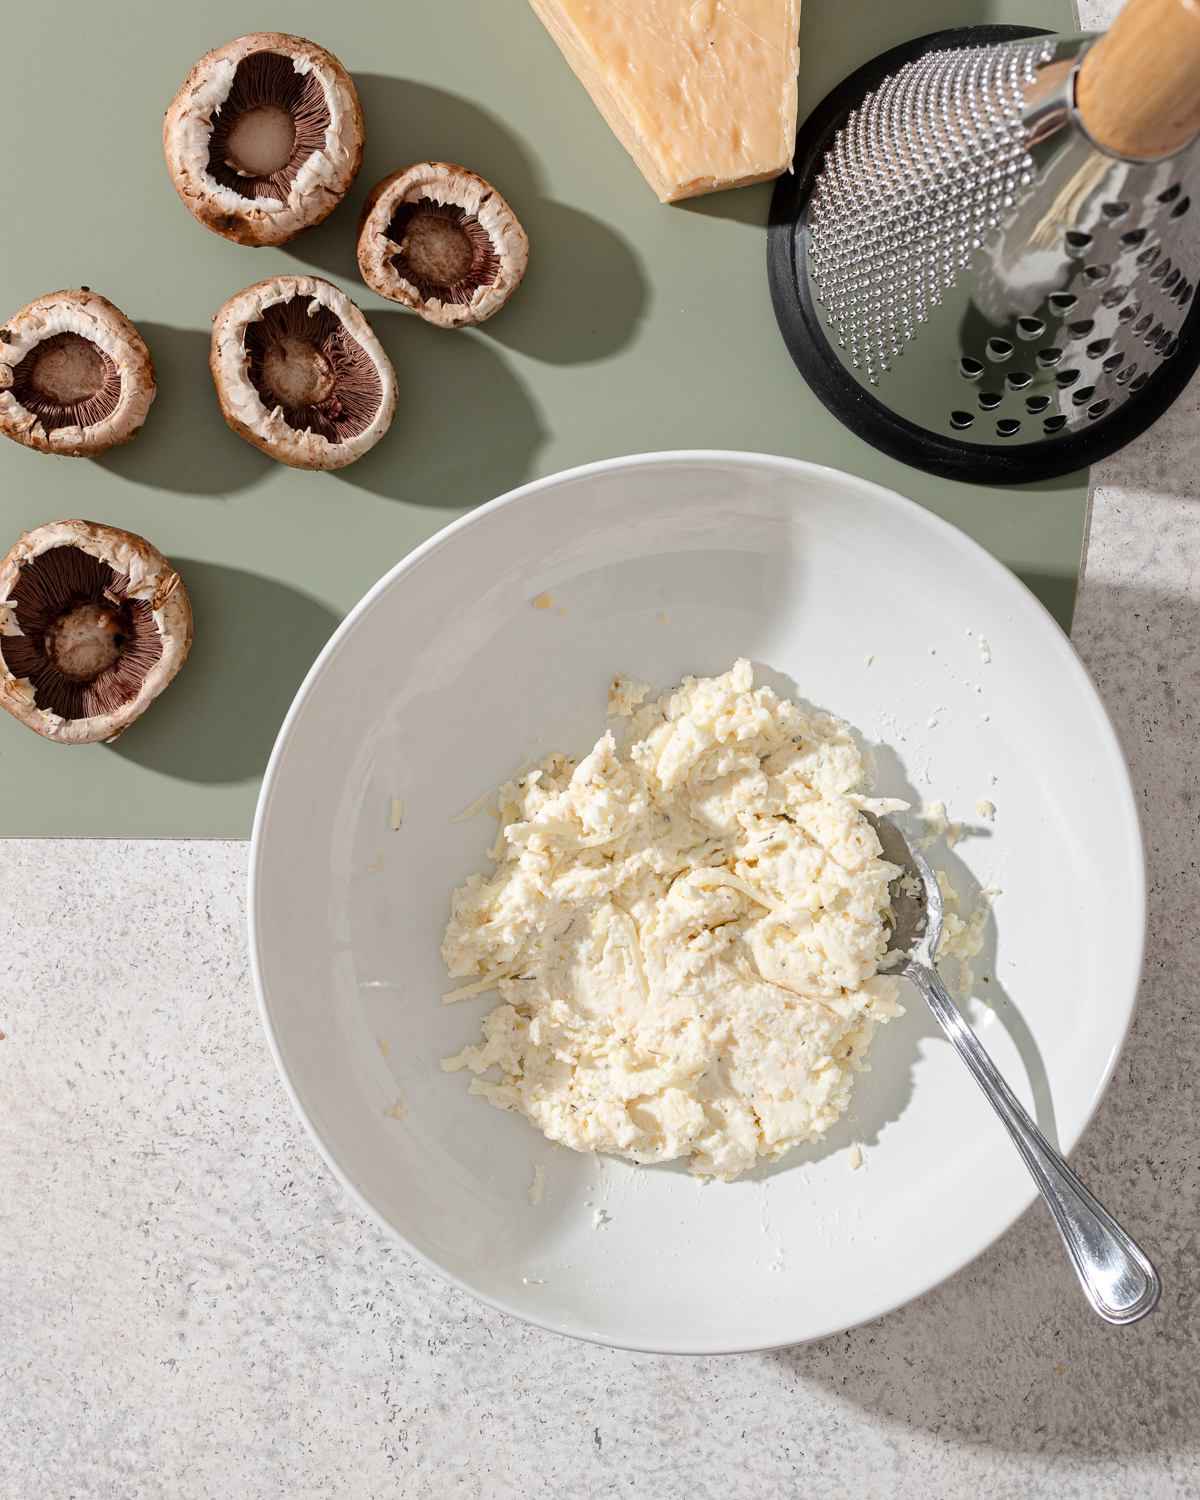 Ricotta cheese mixture for stuffed mushrooms with ricotta recipe.